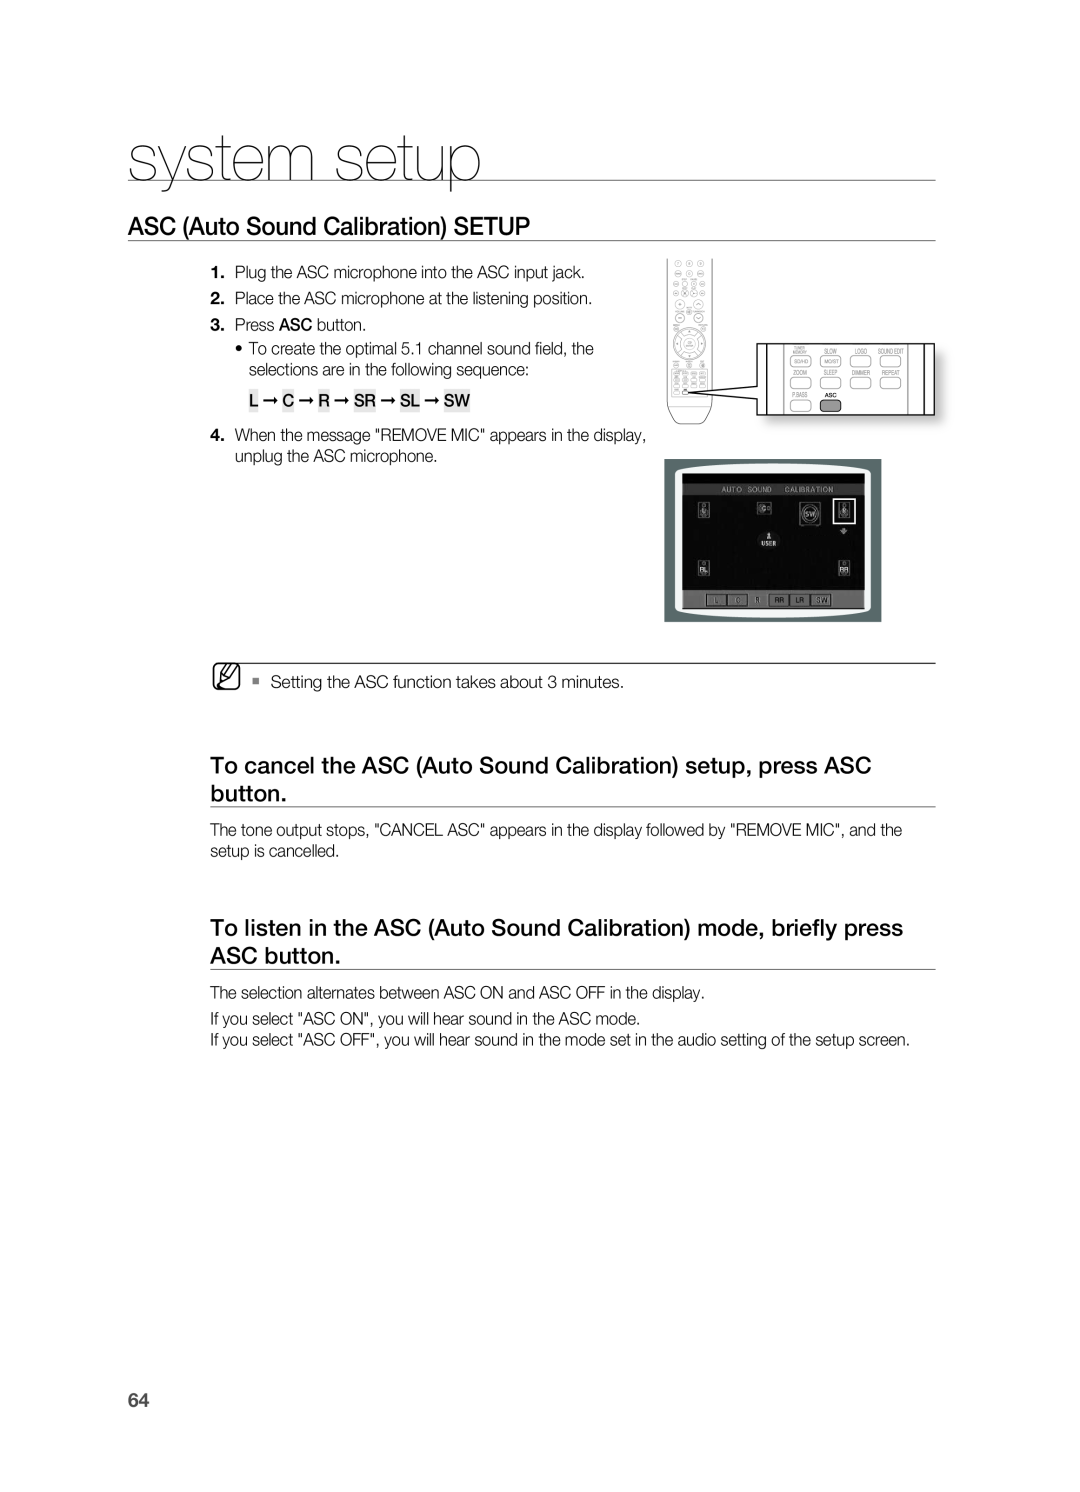 Samsung HT-Z510 manual system setup, ASC Auto Sound Calibration SETUP, L C r Sr SL SW 